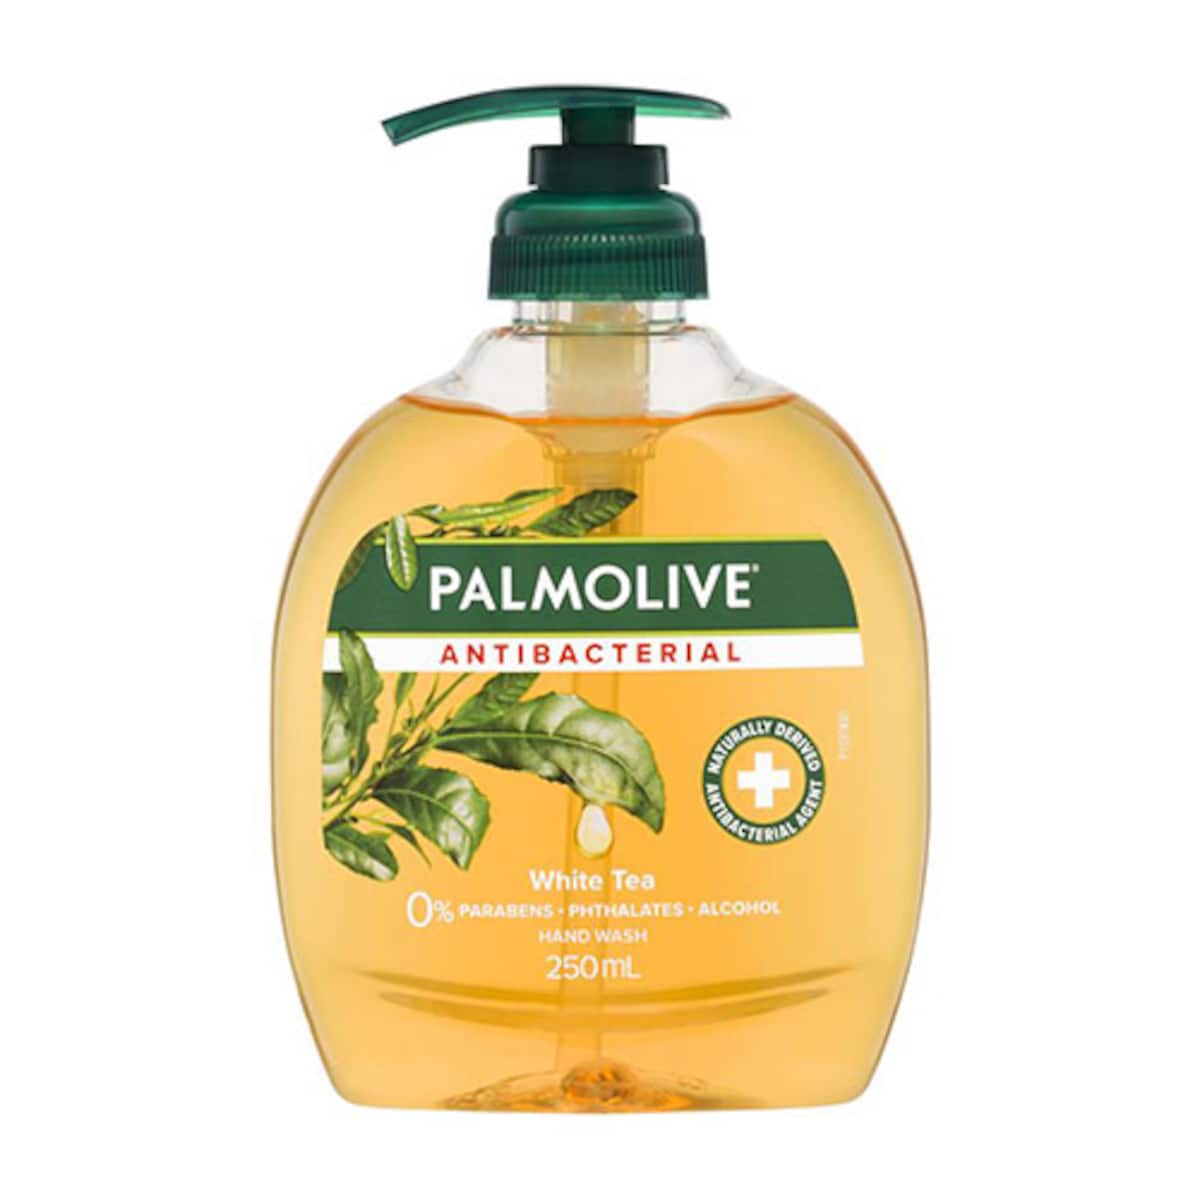 Palmolive Antibacterial Hand Wash White Tea 250ml